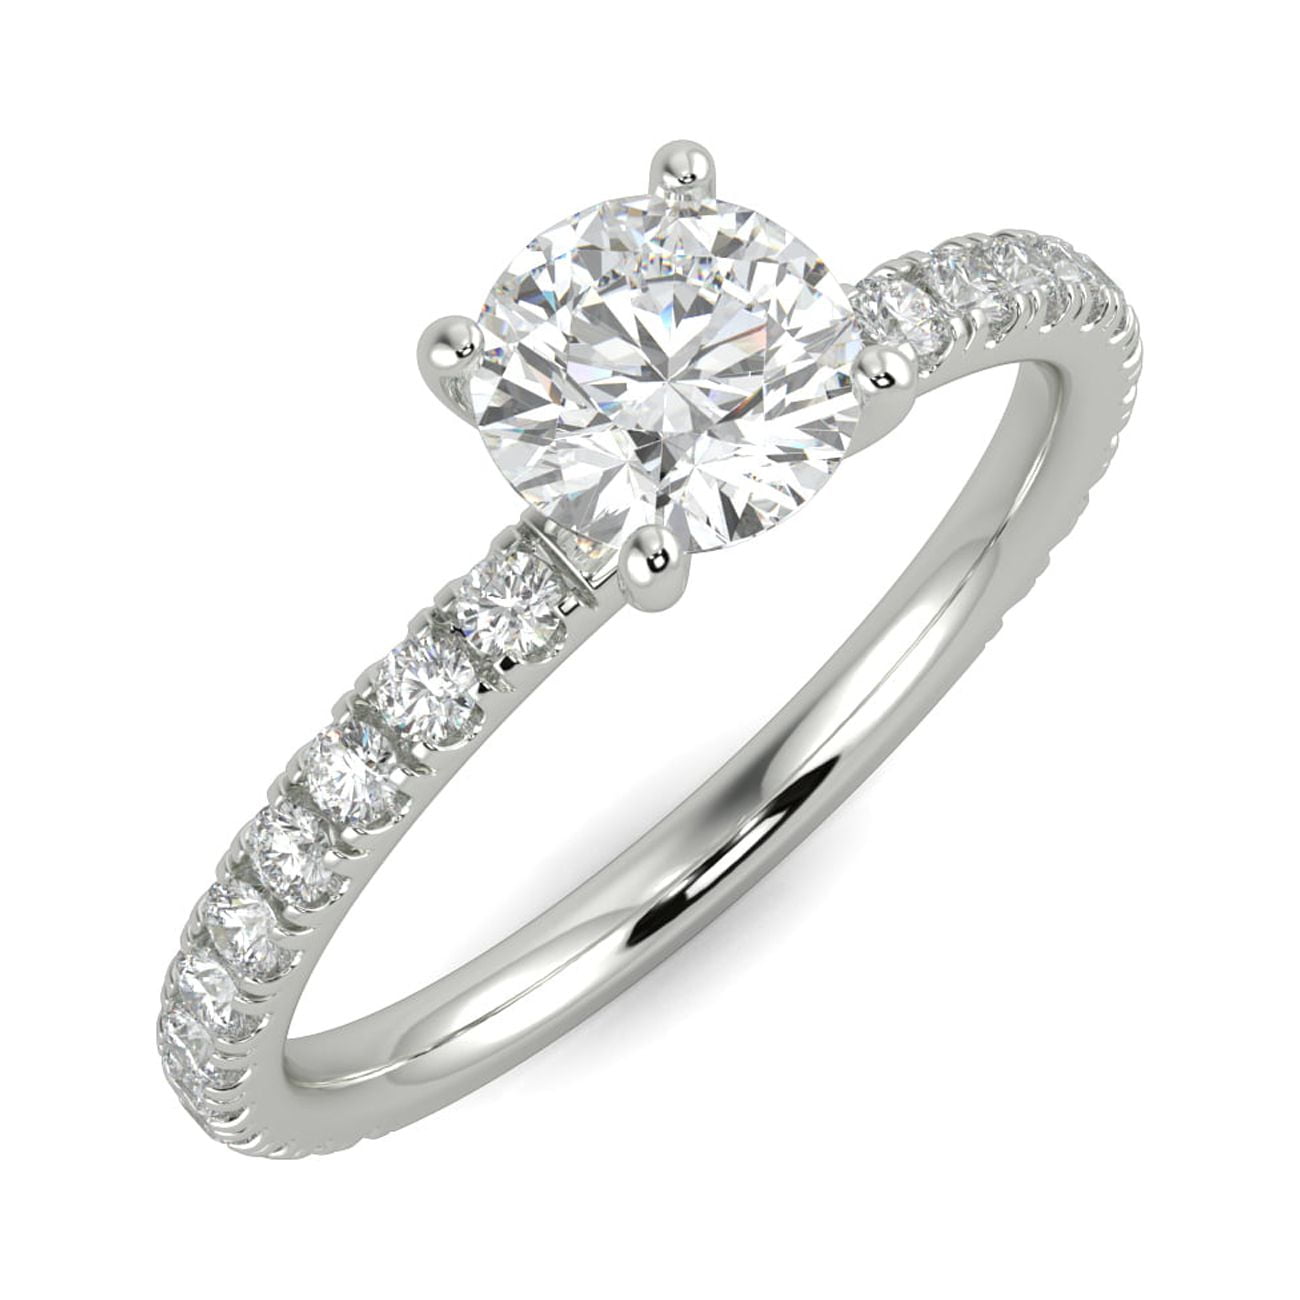 Beautiful Beverly Hills Silver Sterling Silver Diamond Cut Ring Size 7.5 -  4551 | eBay